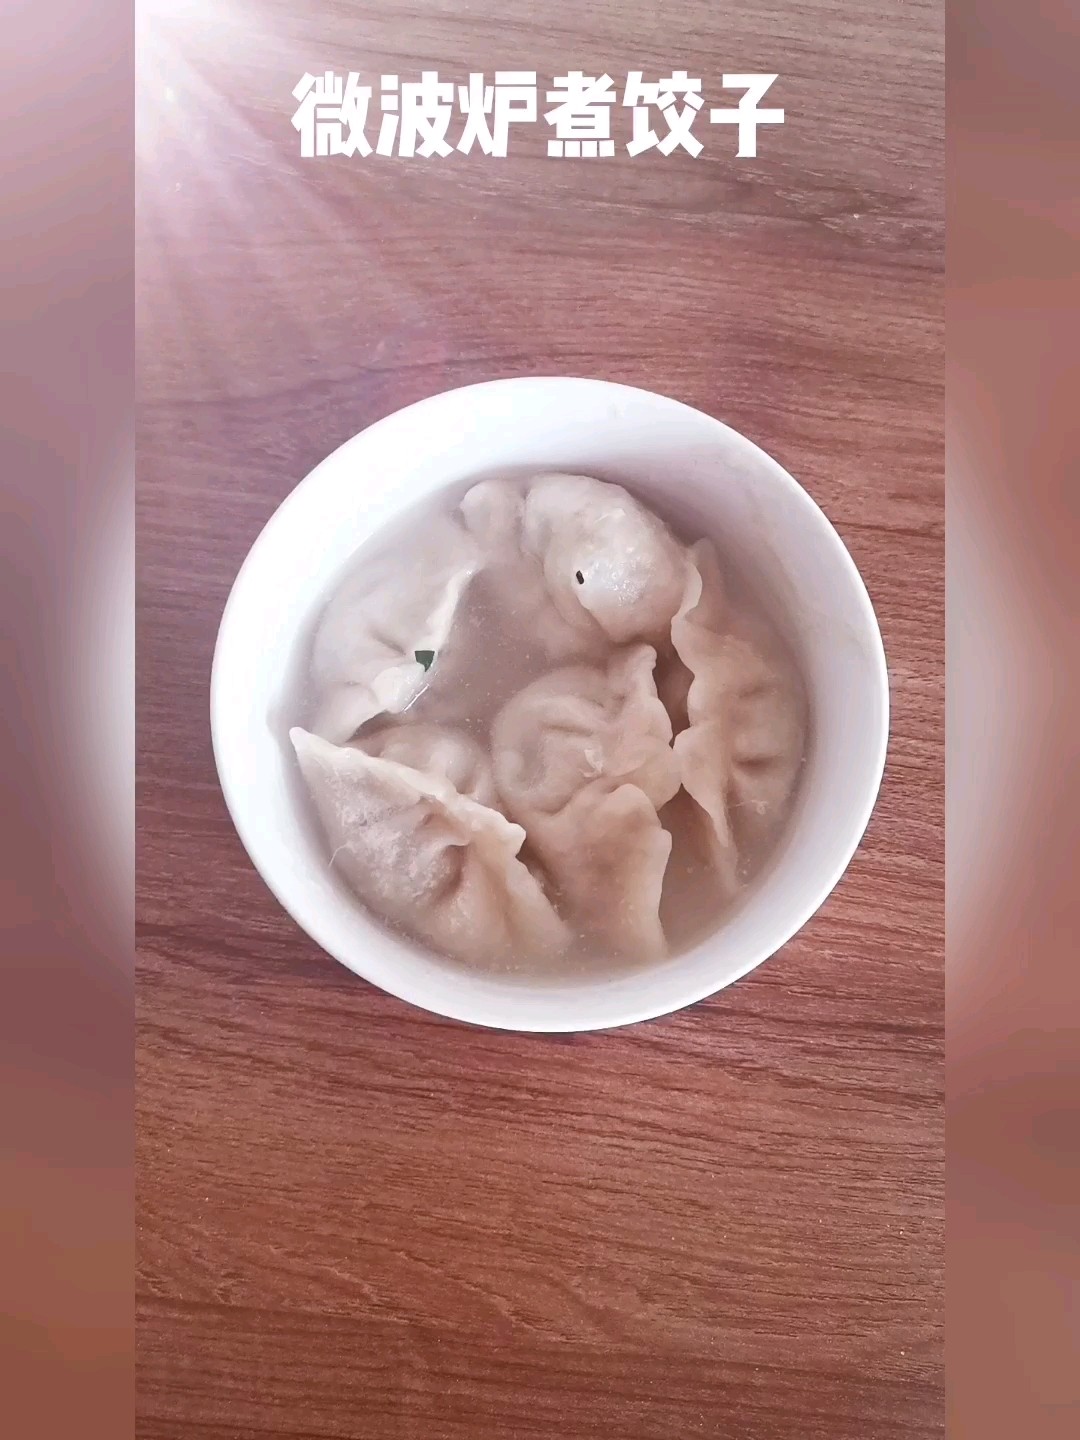 Dumplings Cooked in The Microwave recipe